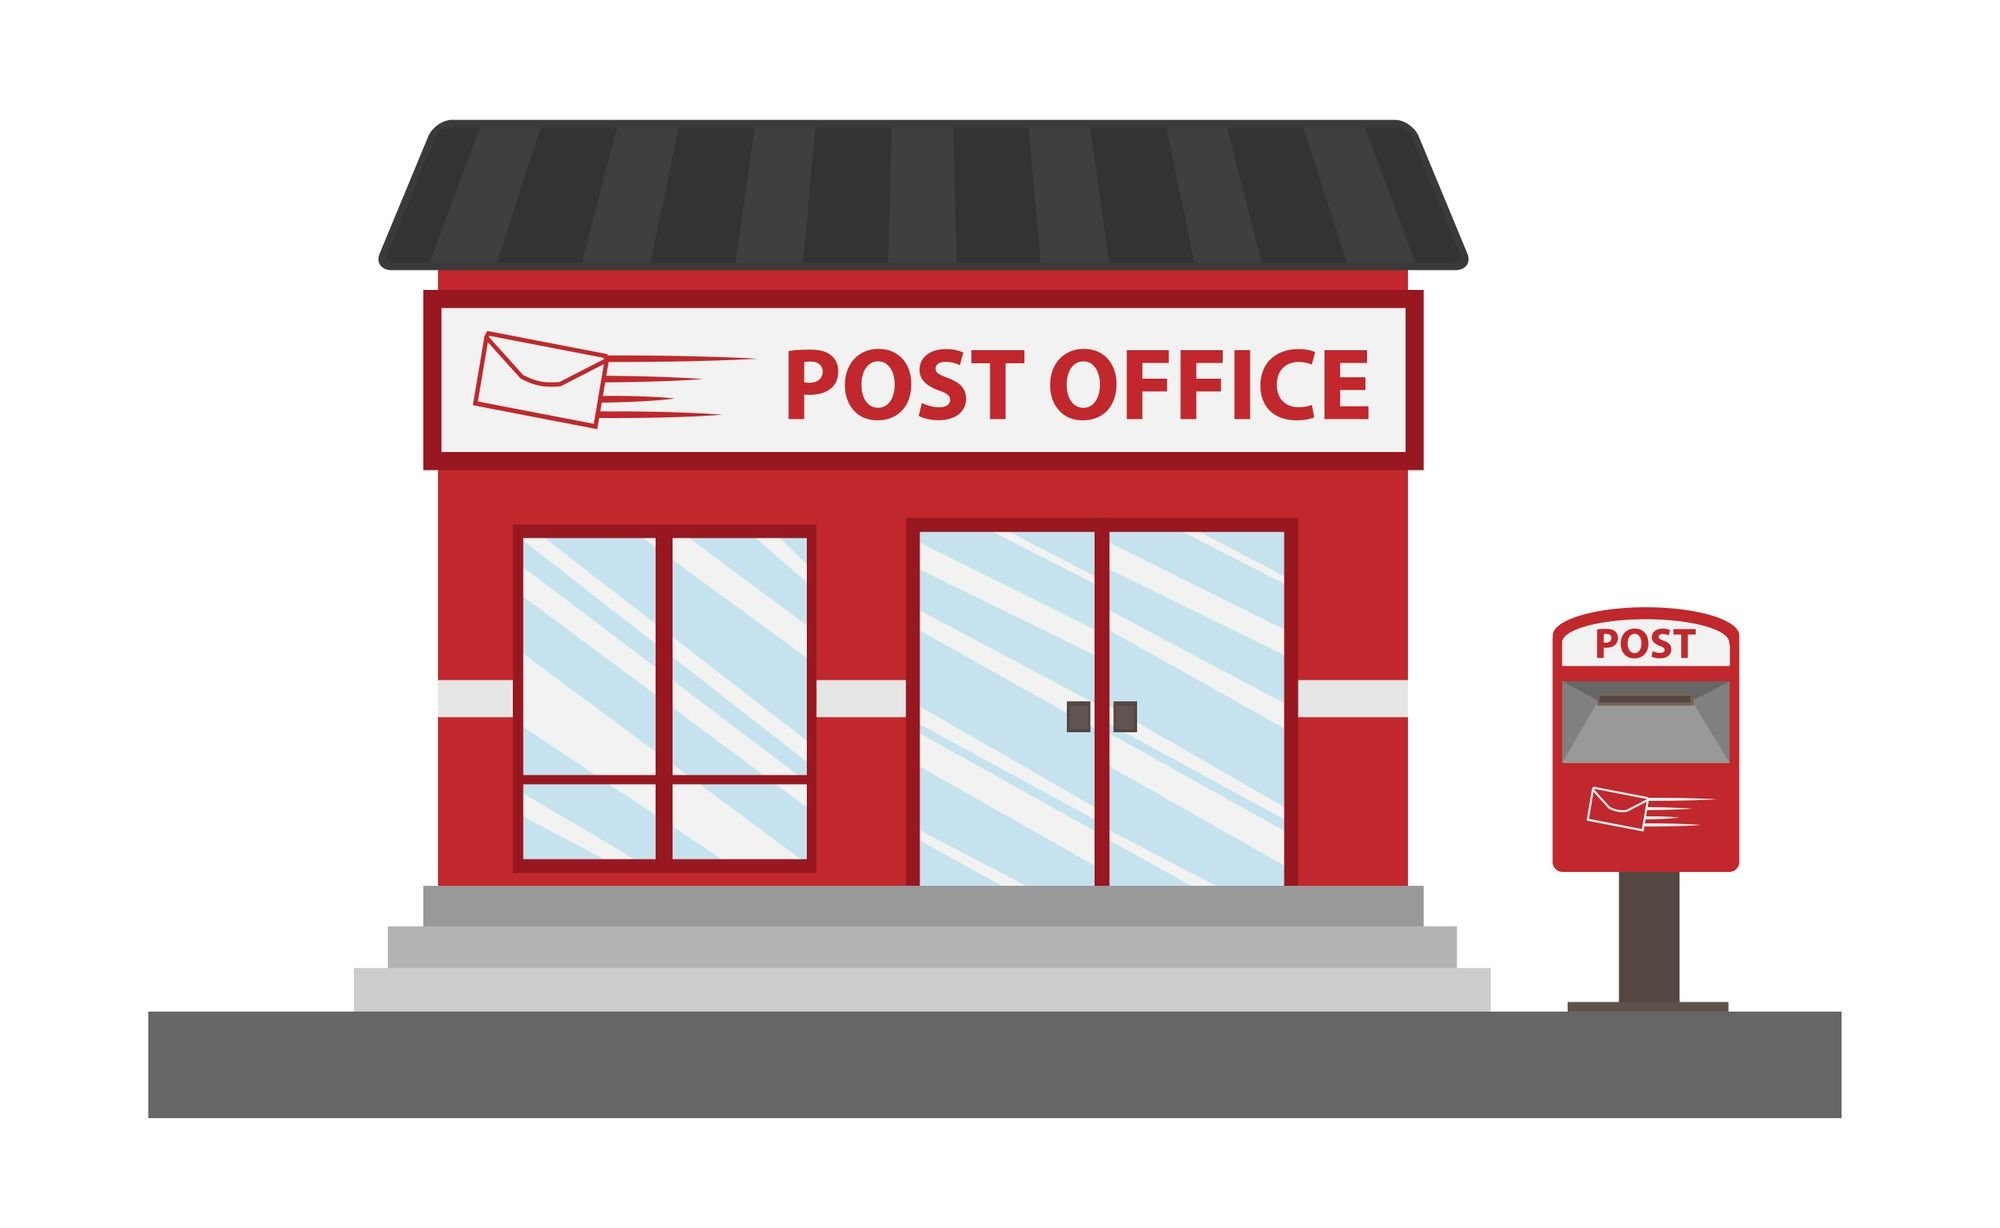 Station post. Здание картинка. Post Office. Почта здание на белом фоне. Post Office рисунок.